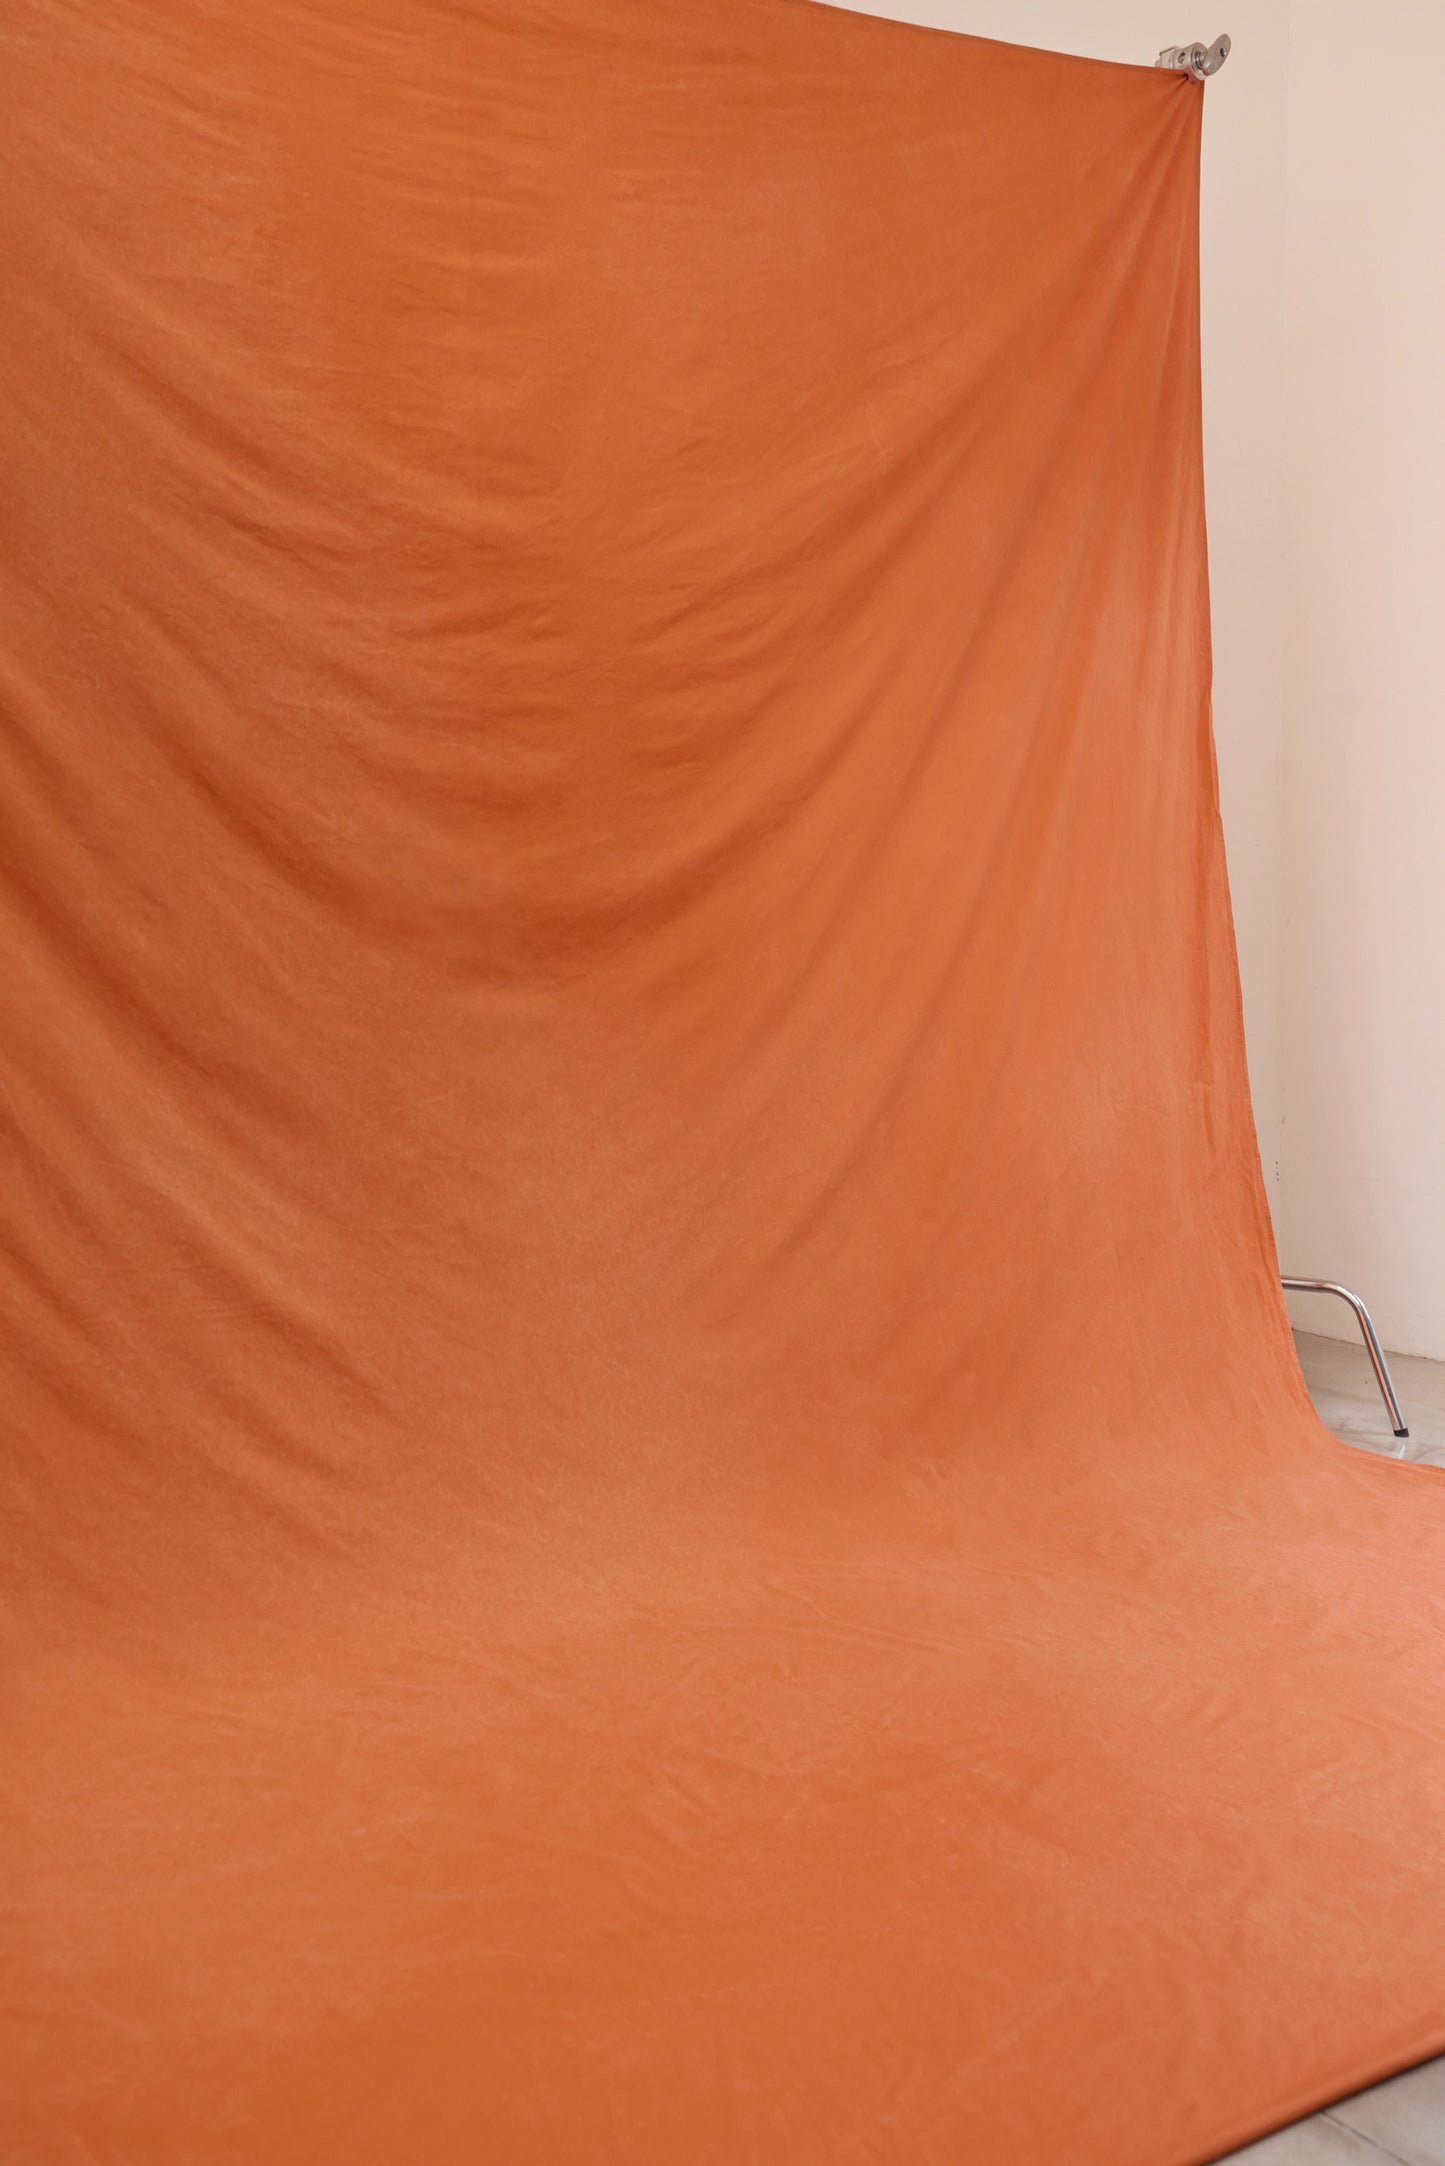 [3x4m] Cotton Backdrop Tangerine